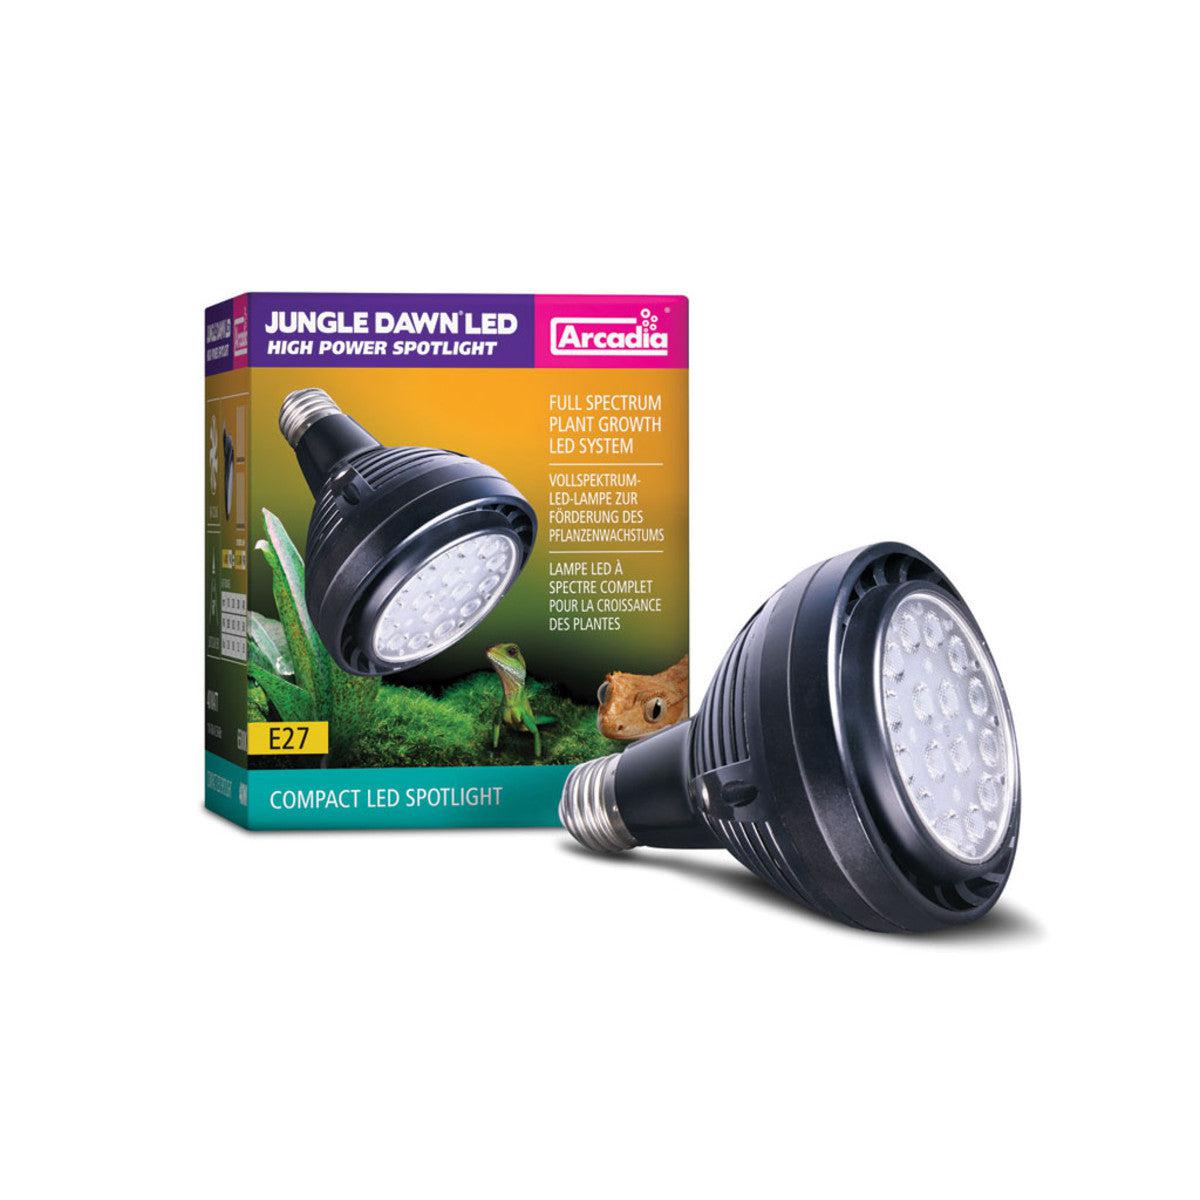 Arcadia Jungle Dawn LED High Power Spotlight, 40w